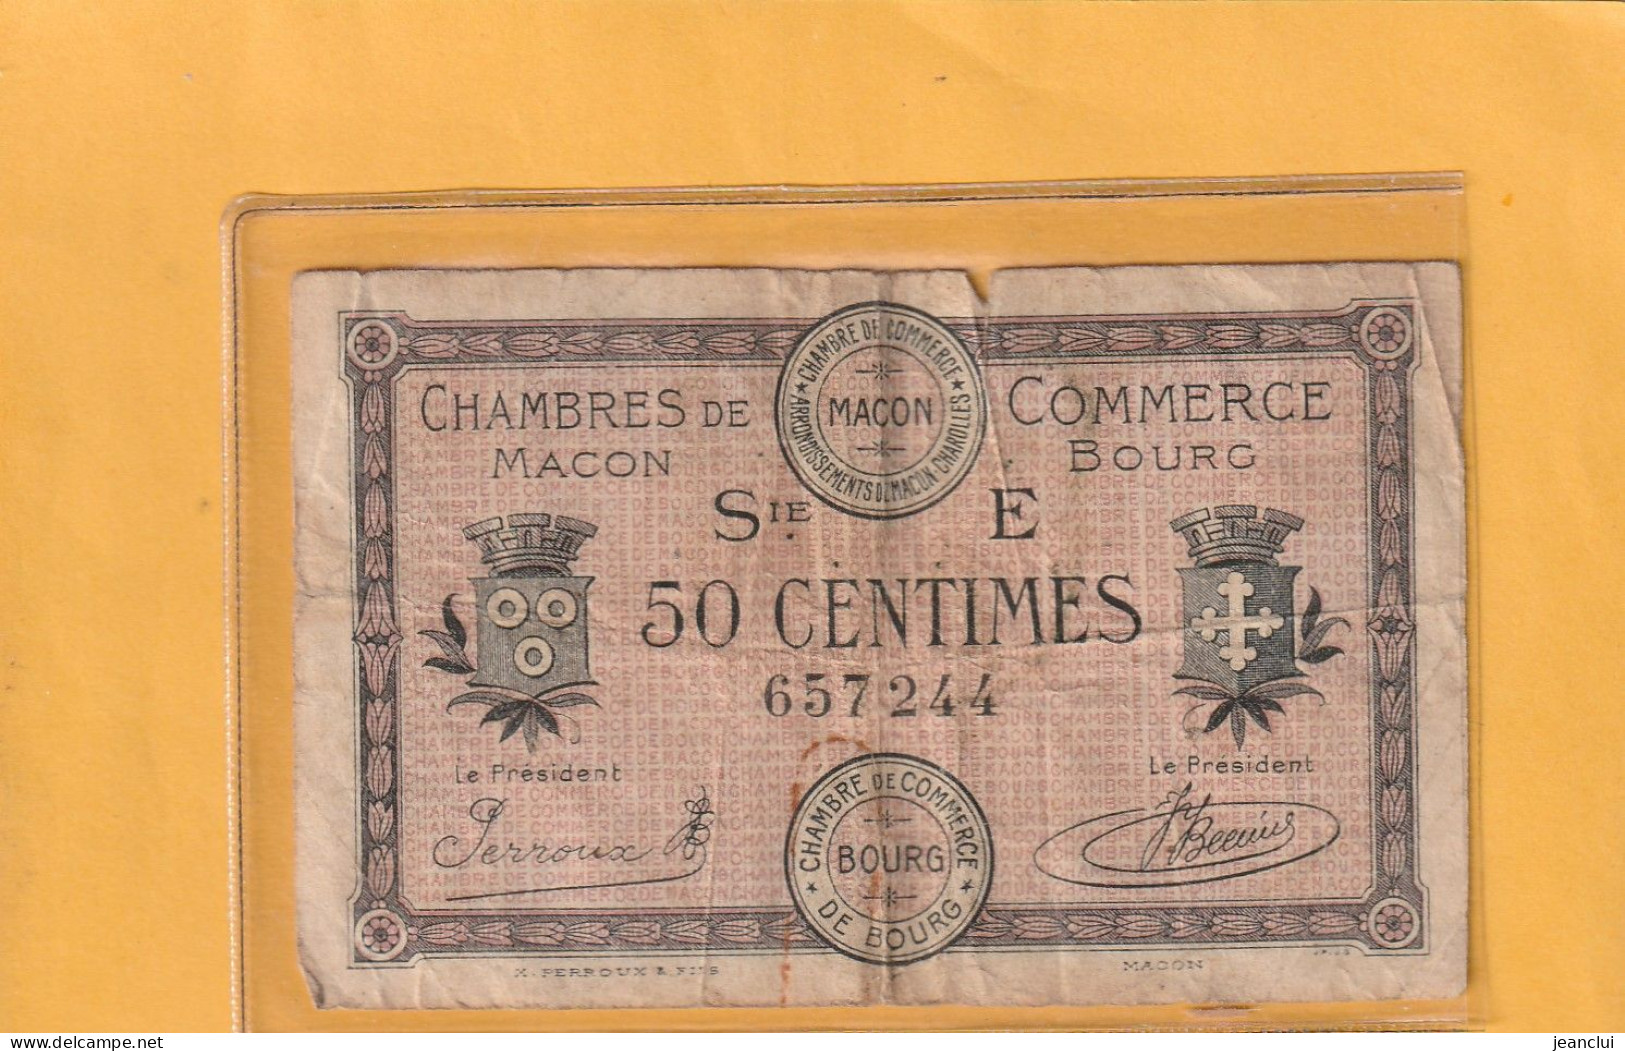 CHAMBRE DE COMMERCE DE MACON - BOURG . 50 Cts . EMISSION DU 27-4-1920 . SERIE E . N° 657244 . 2 SCANNES . BILLET USITE - Camera Di Commercio